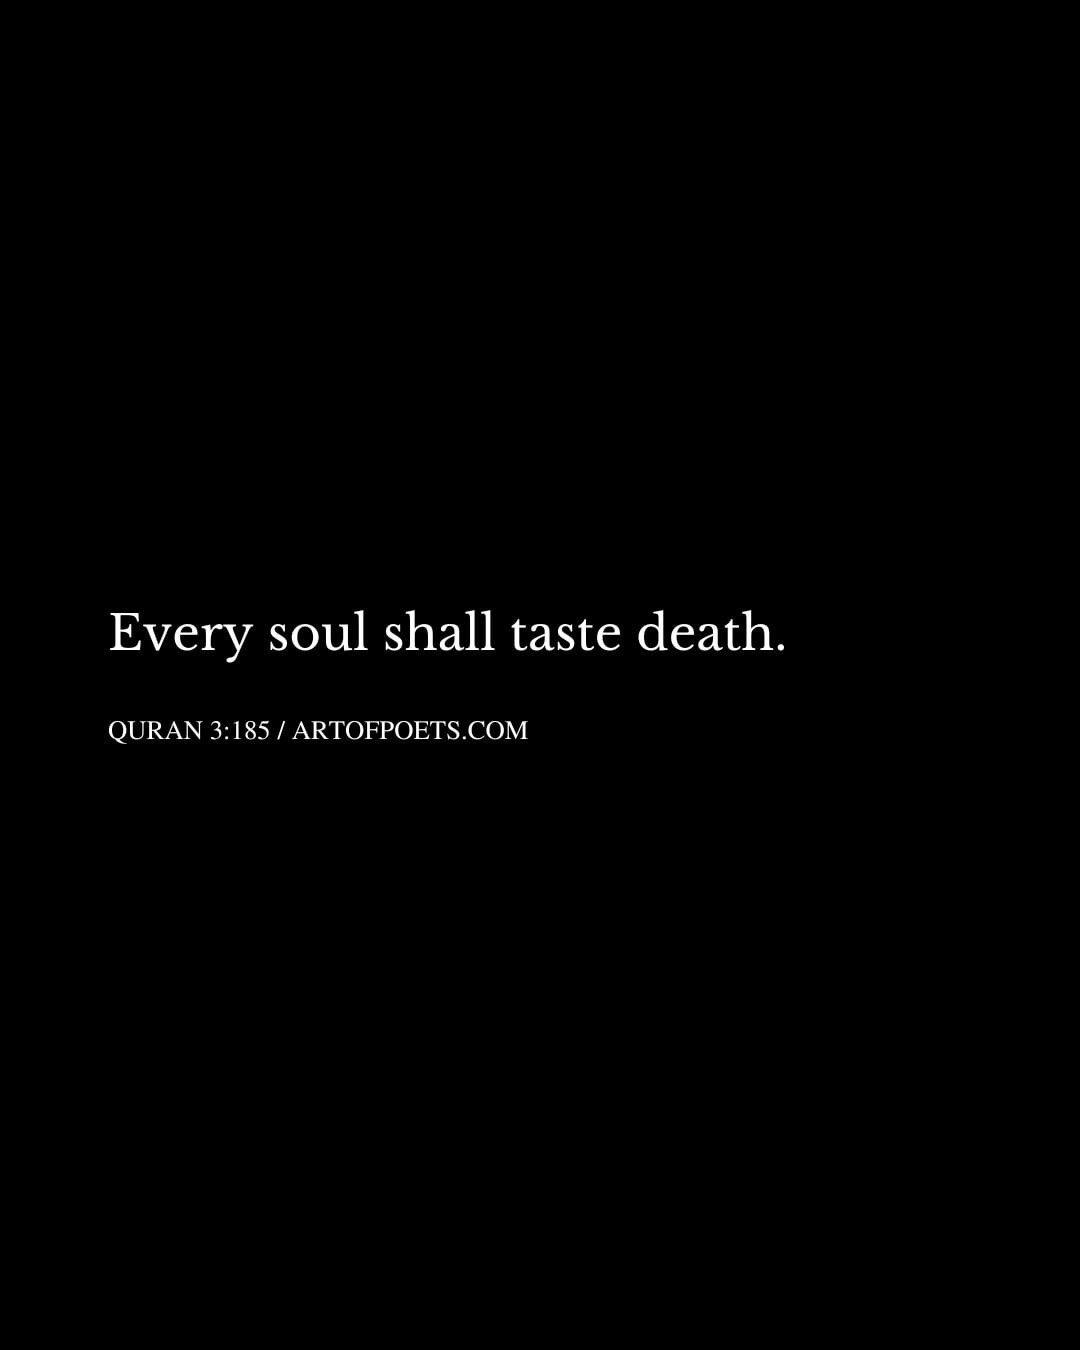 Every soul shall taste death